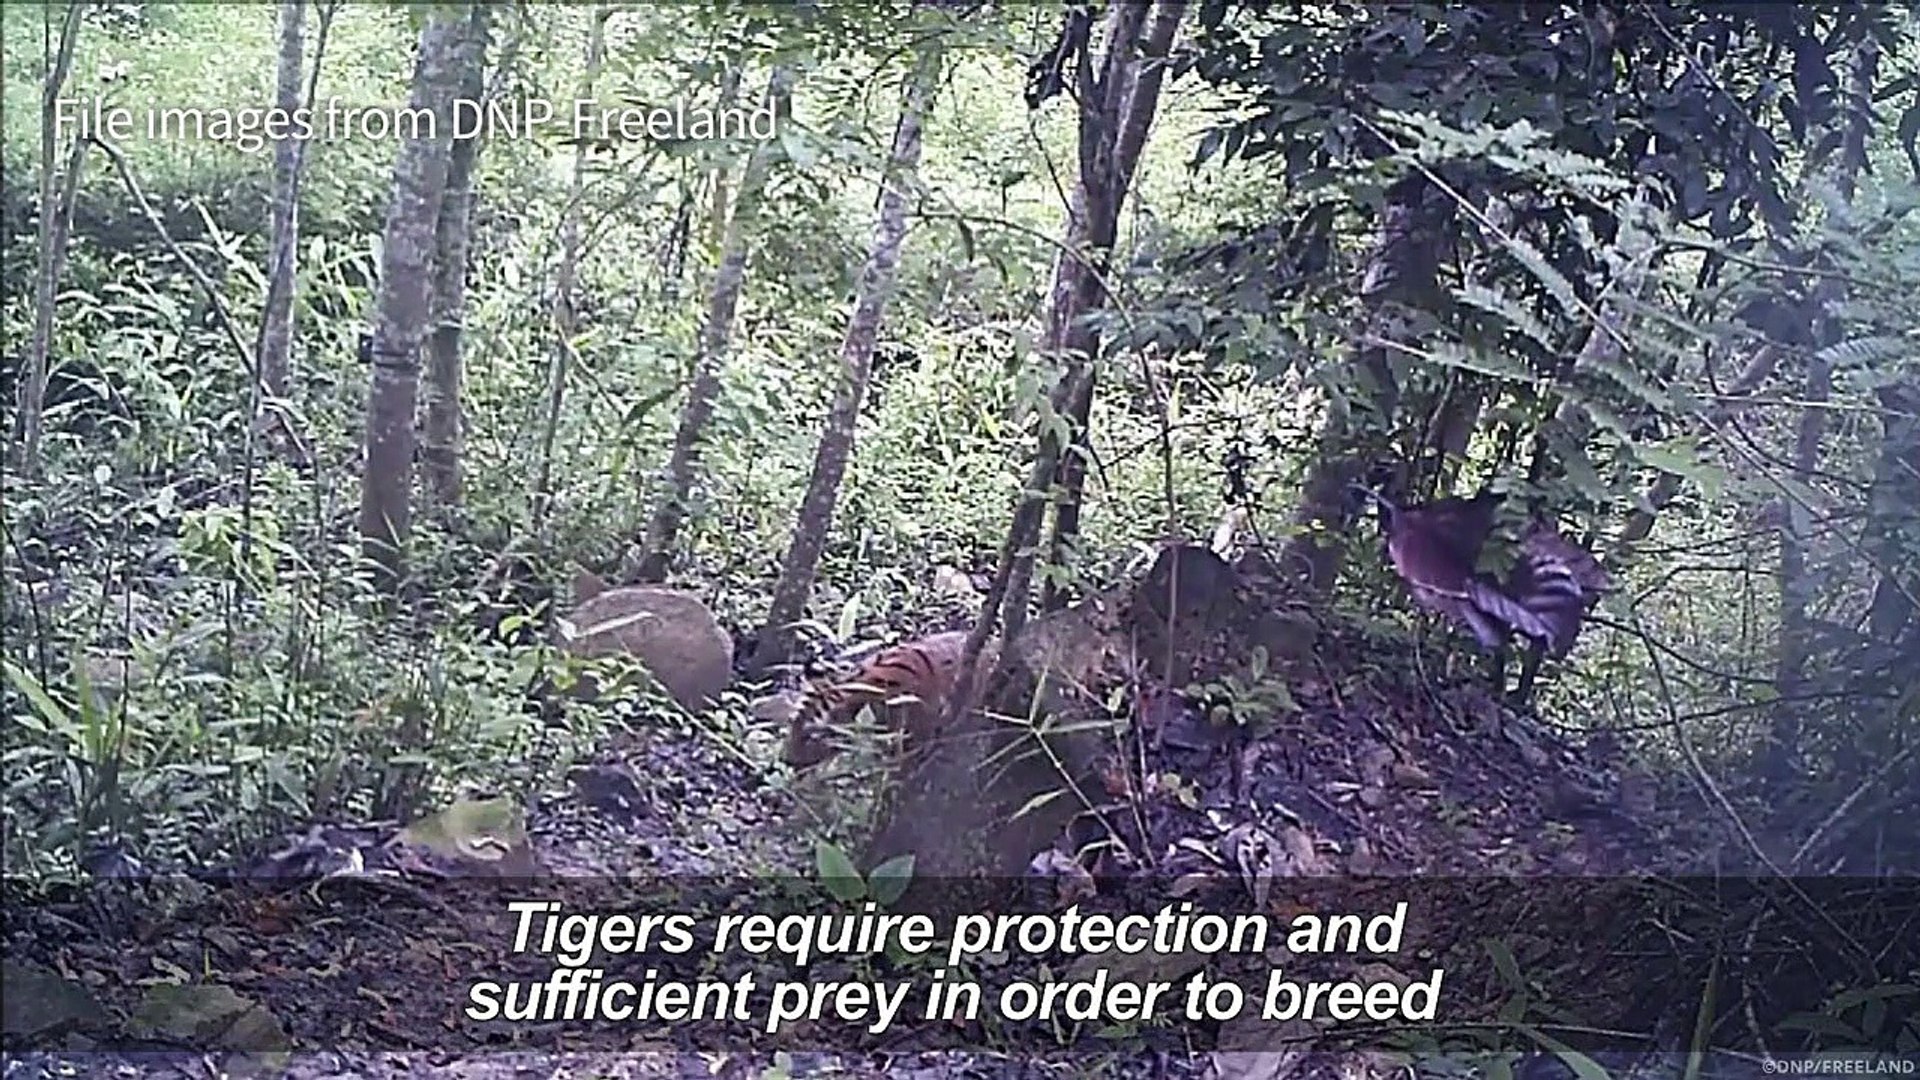 Wild Thai tiger cub footage sparks hope for endangered species